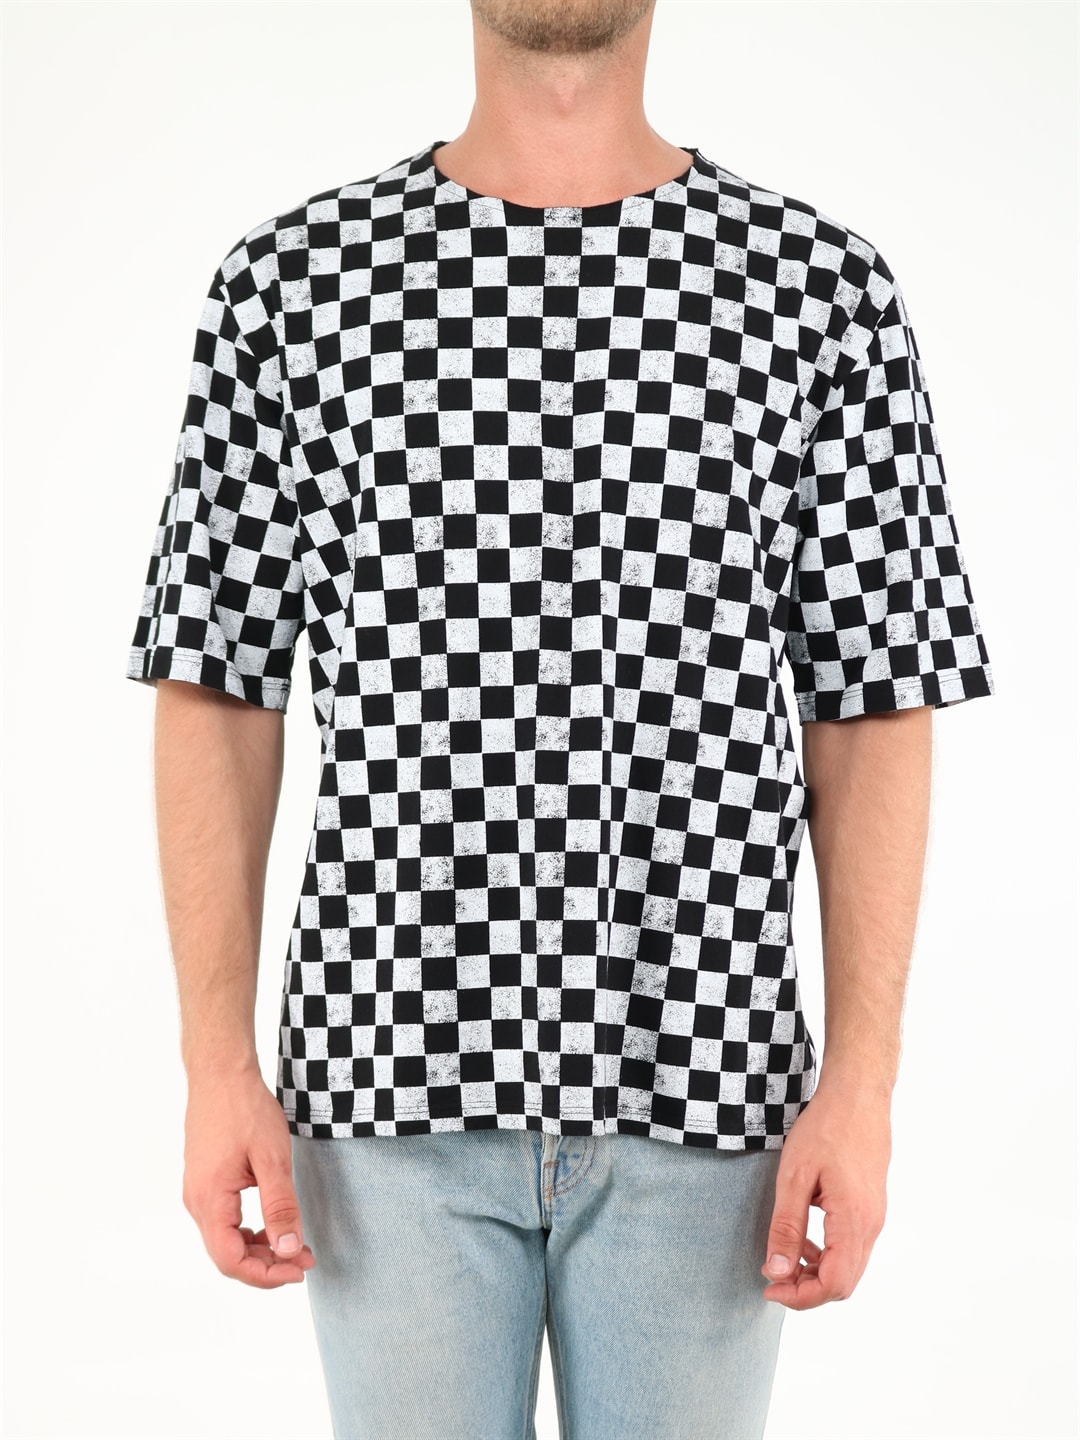 Saint Laurent Black And White Checkered T-shirt